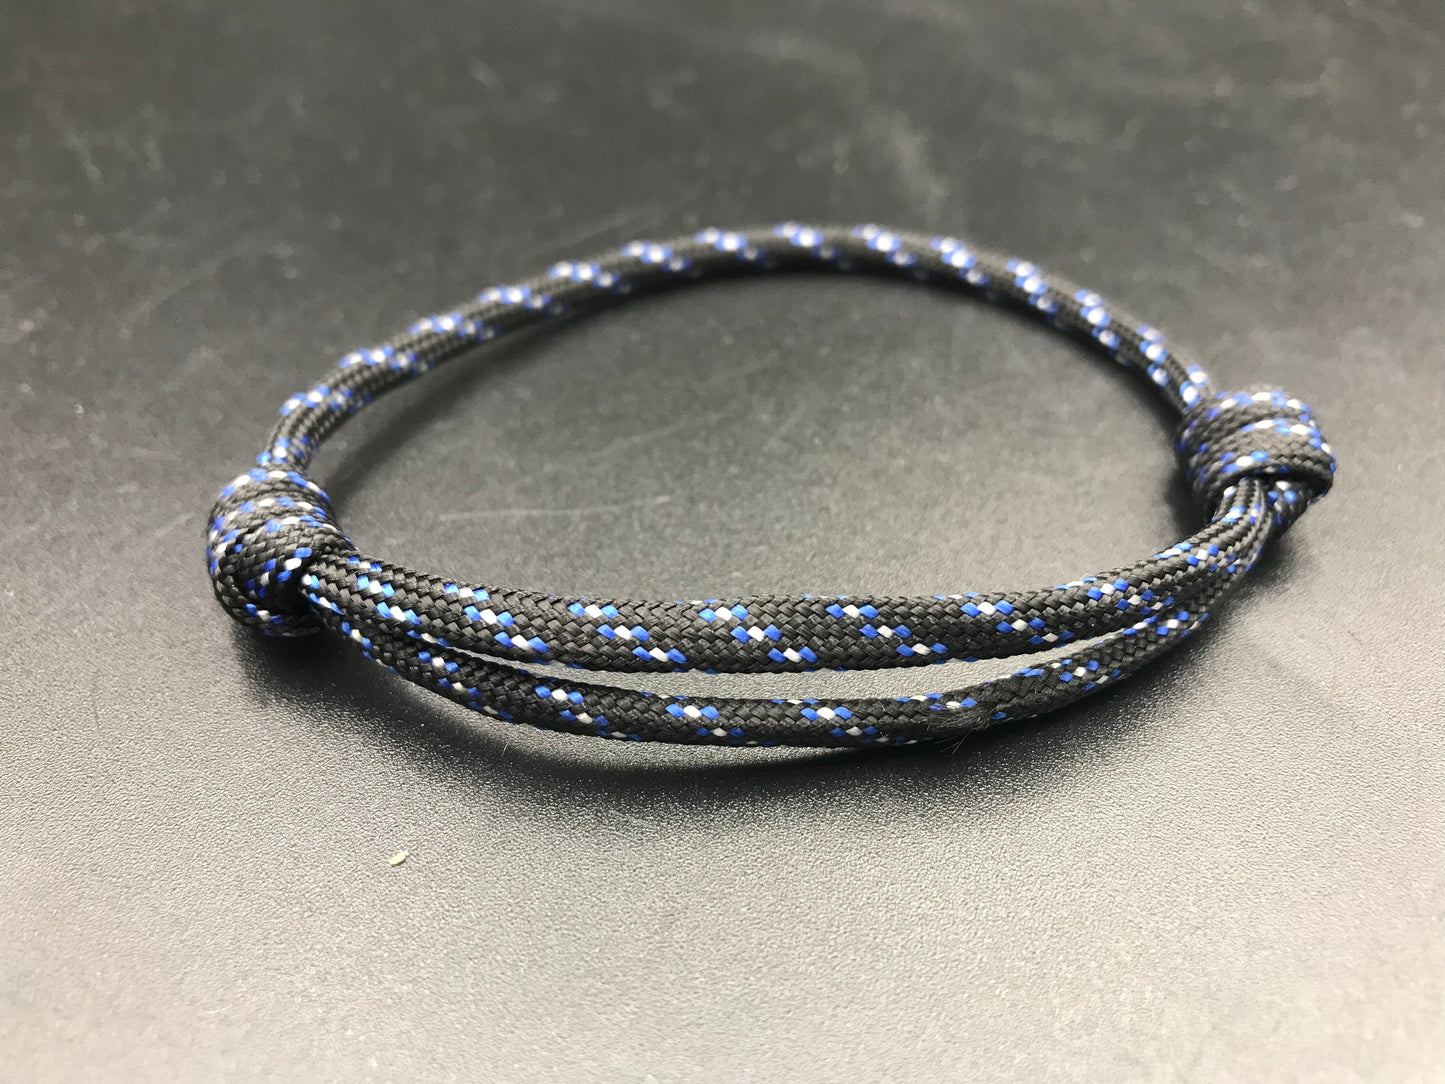 Paracord Friendship bracelets fully adjustable with sliding knot